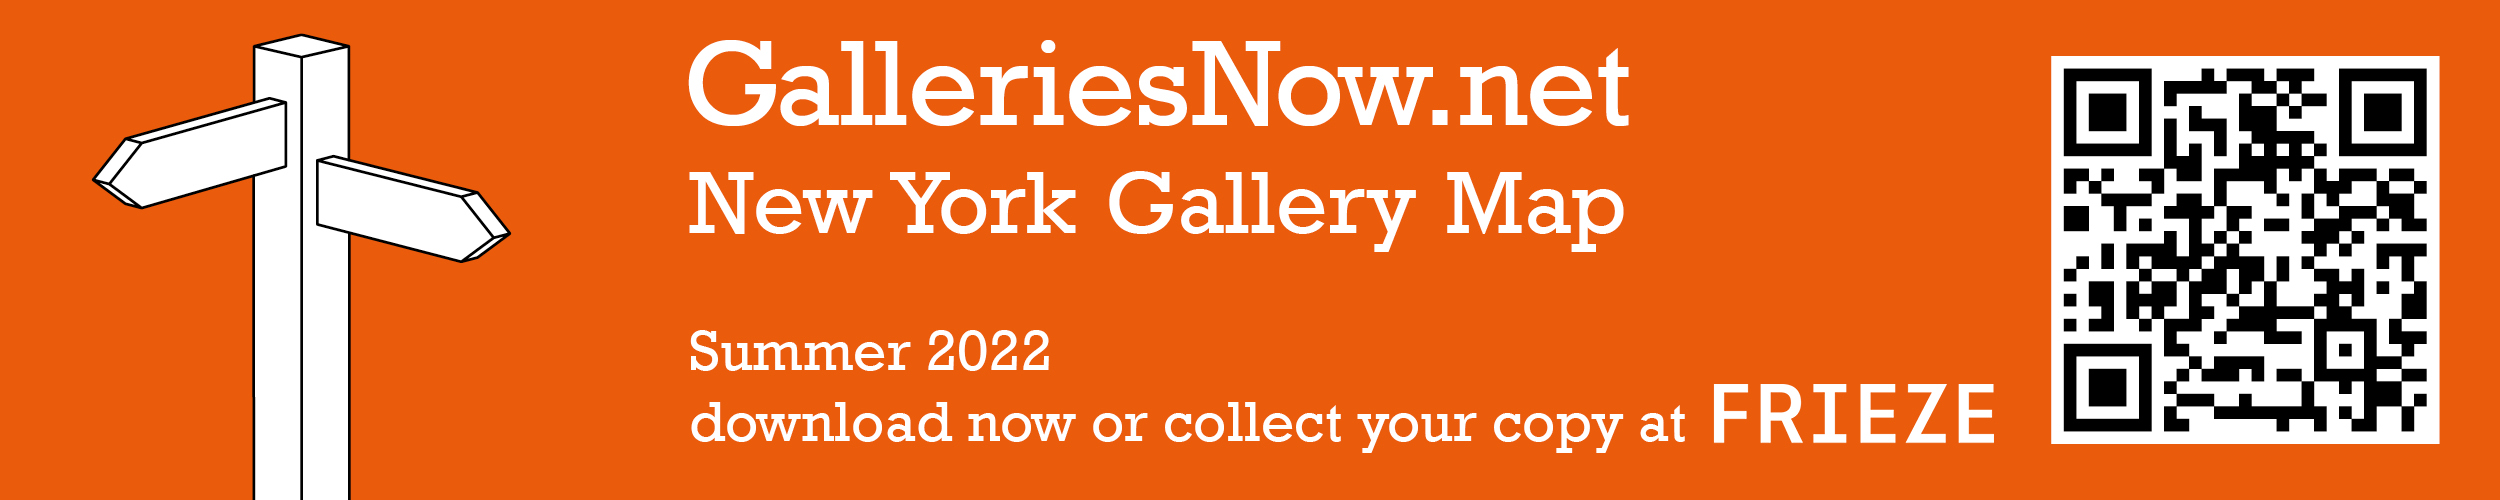 the latest GalleriesNow New York Gallery Map